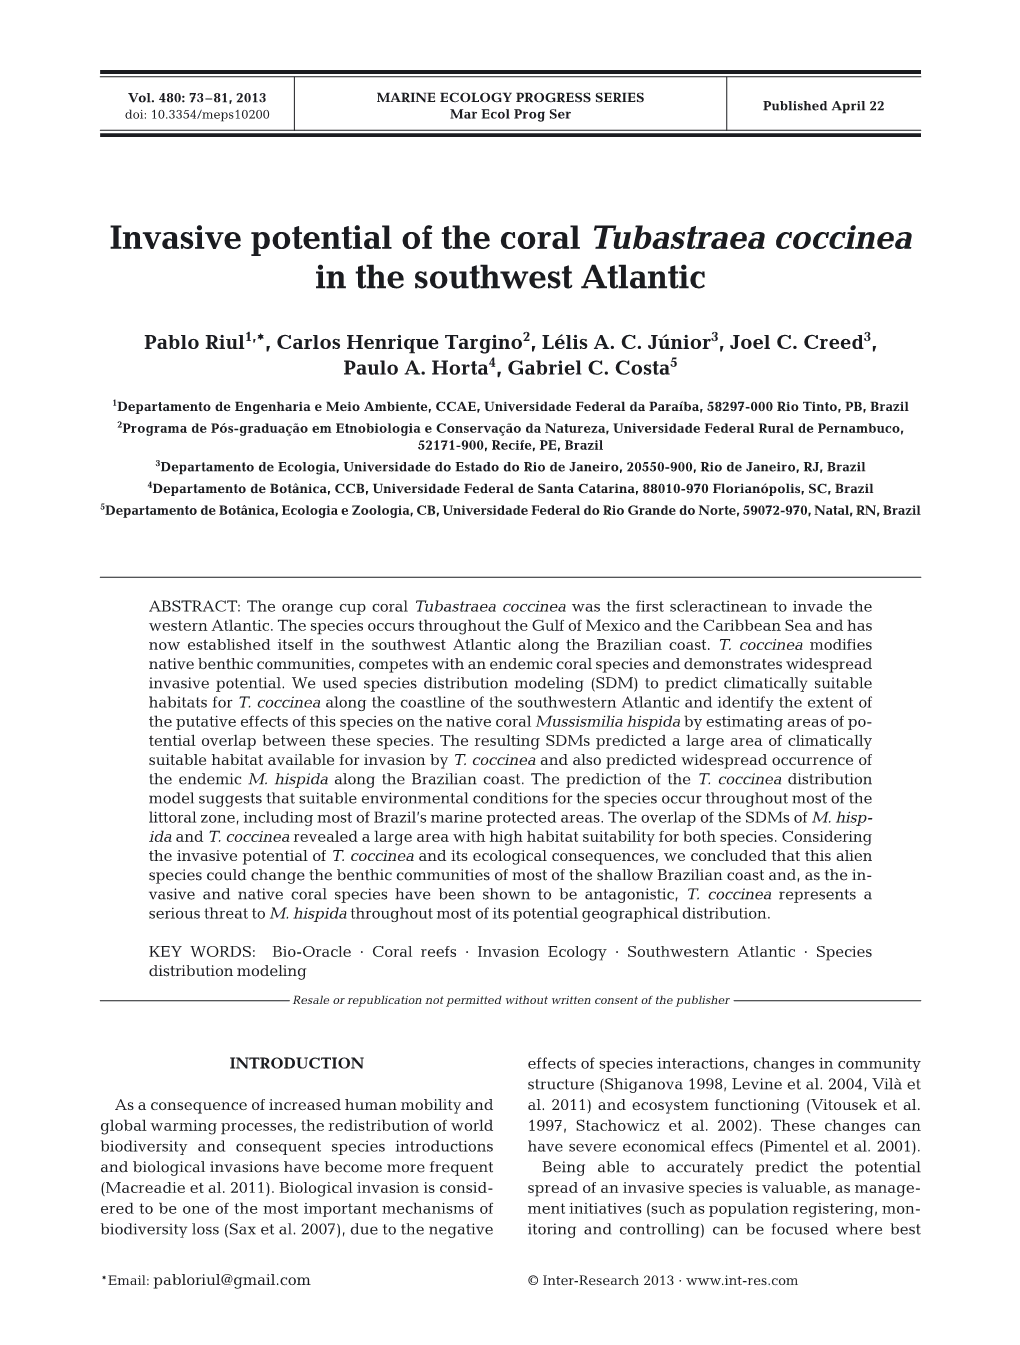 Invasive Potential of the Coral Tubastraea Coccinea in the Southwest Atlantic